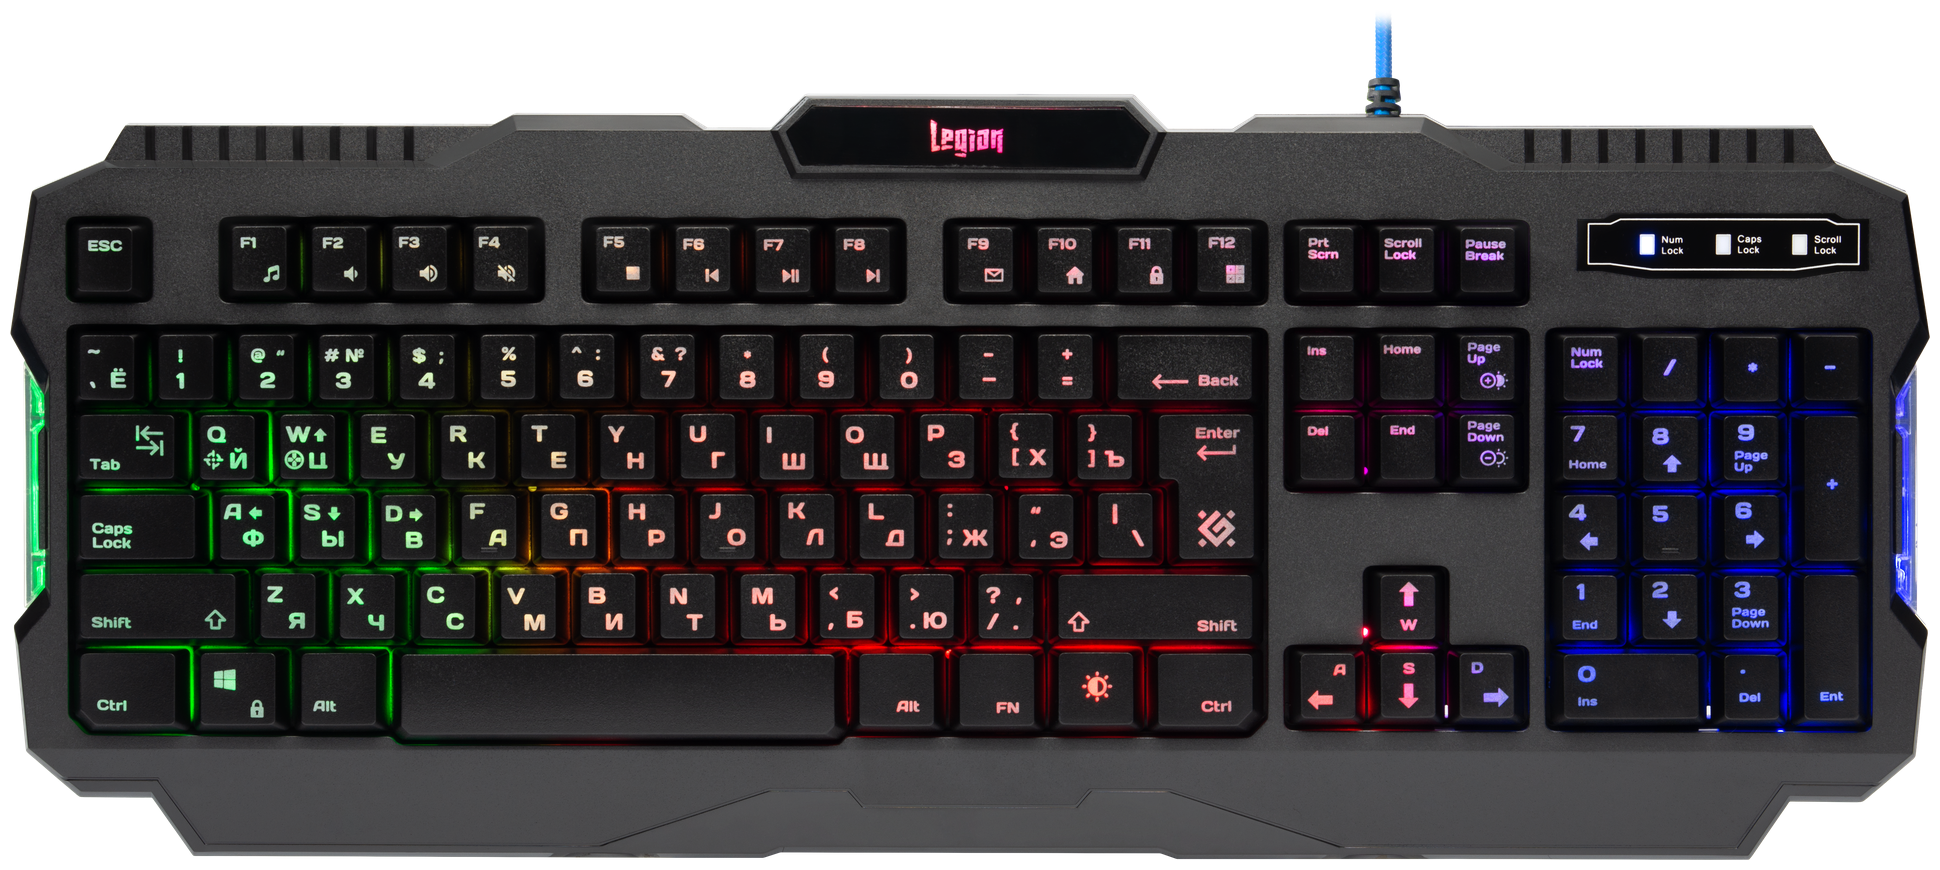 Проводная игровая клавиатура Defender Legion GK-010DL RU,RGB подсветка,19 Anti-Ghost